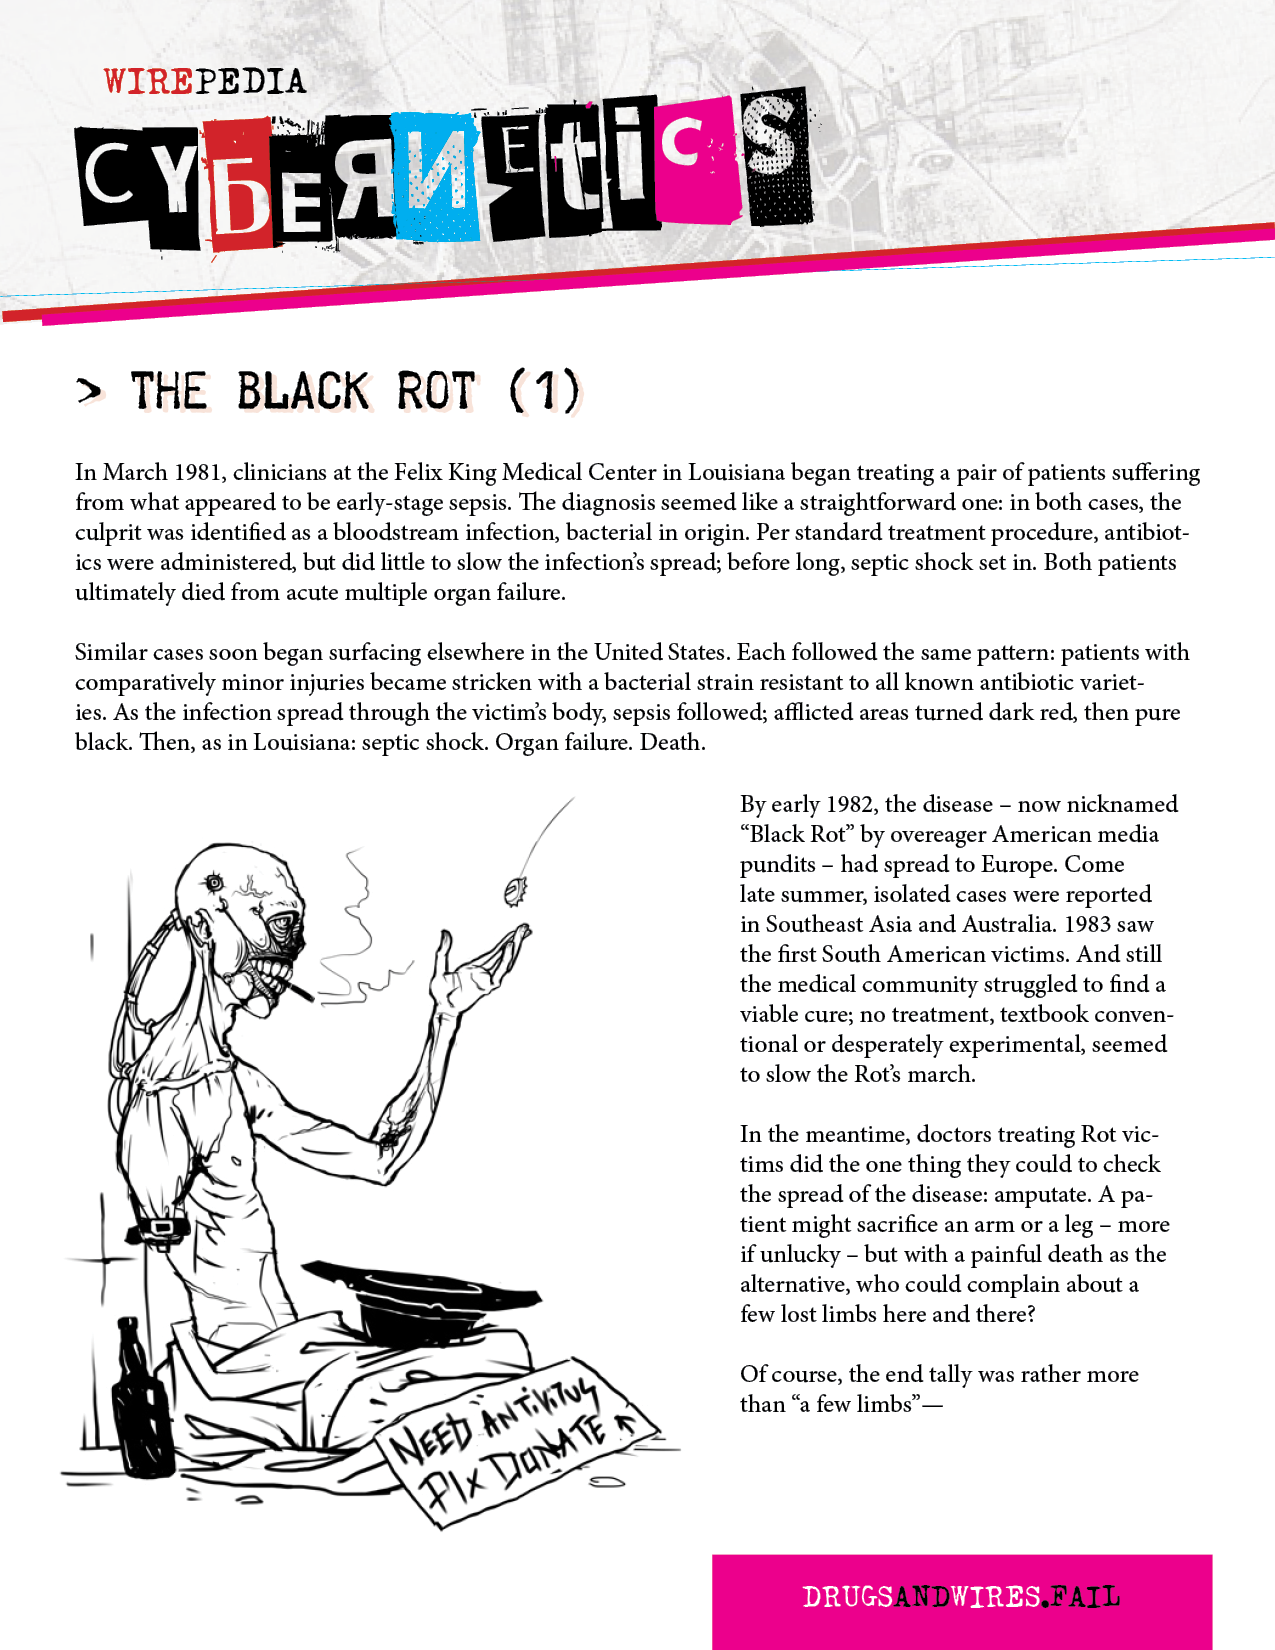 Wirepedia: The Black Rot